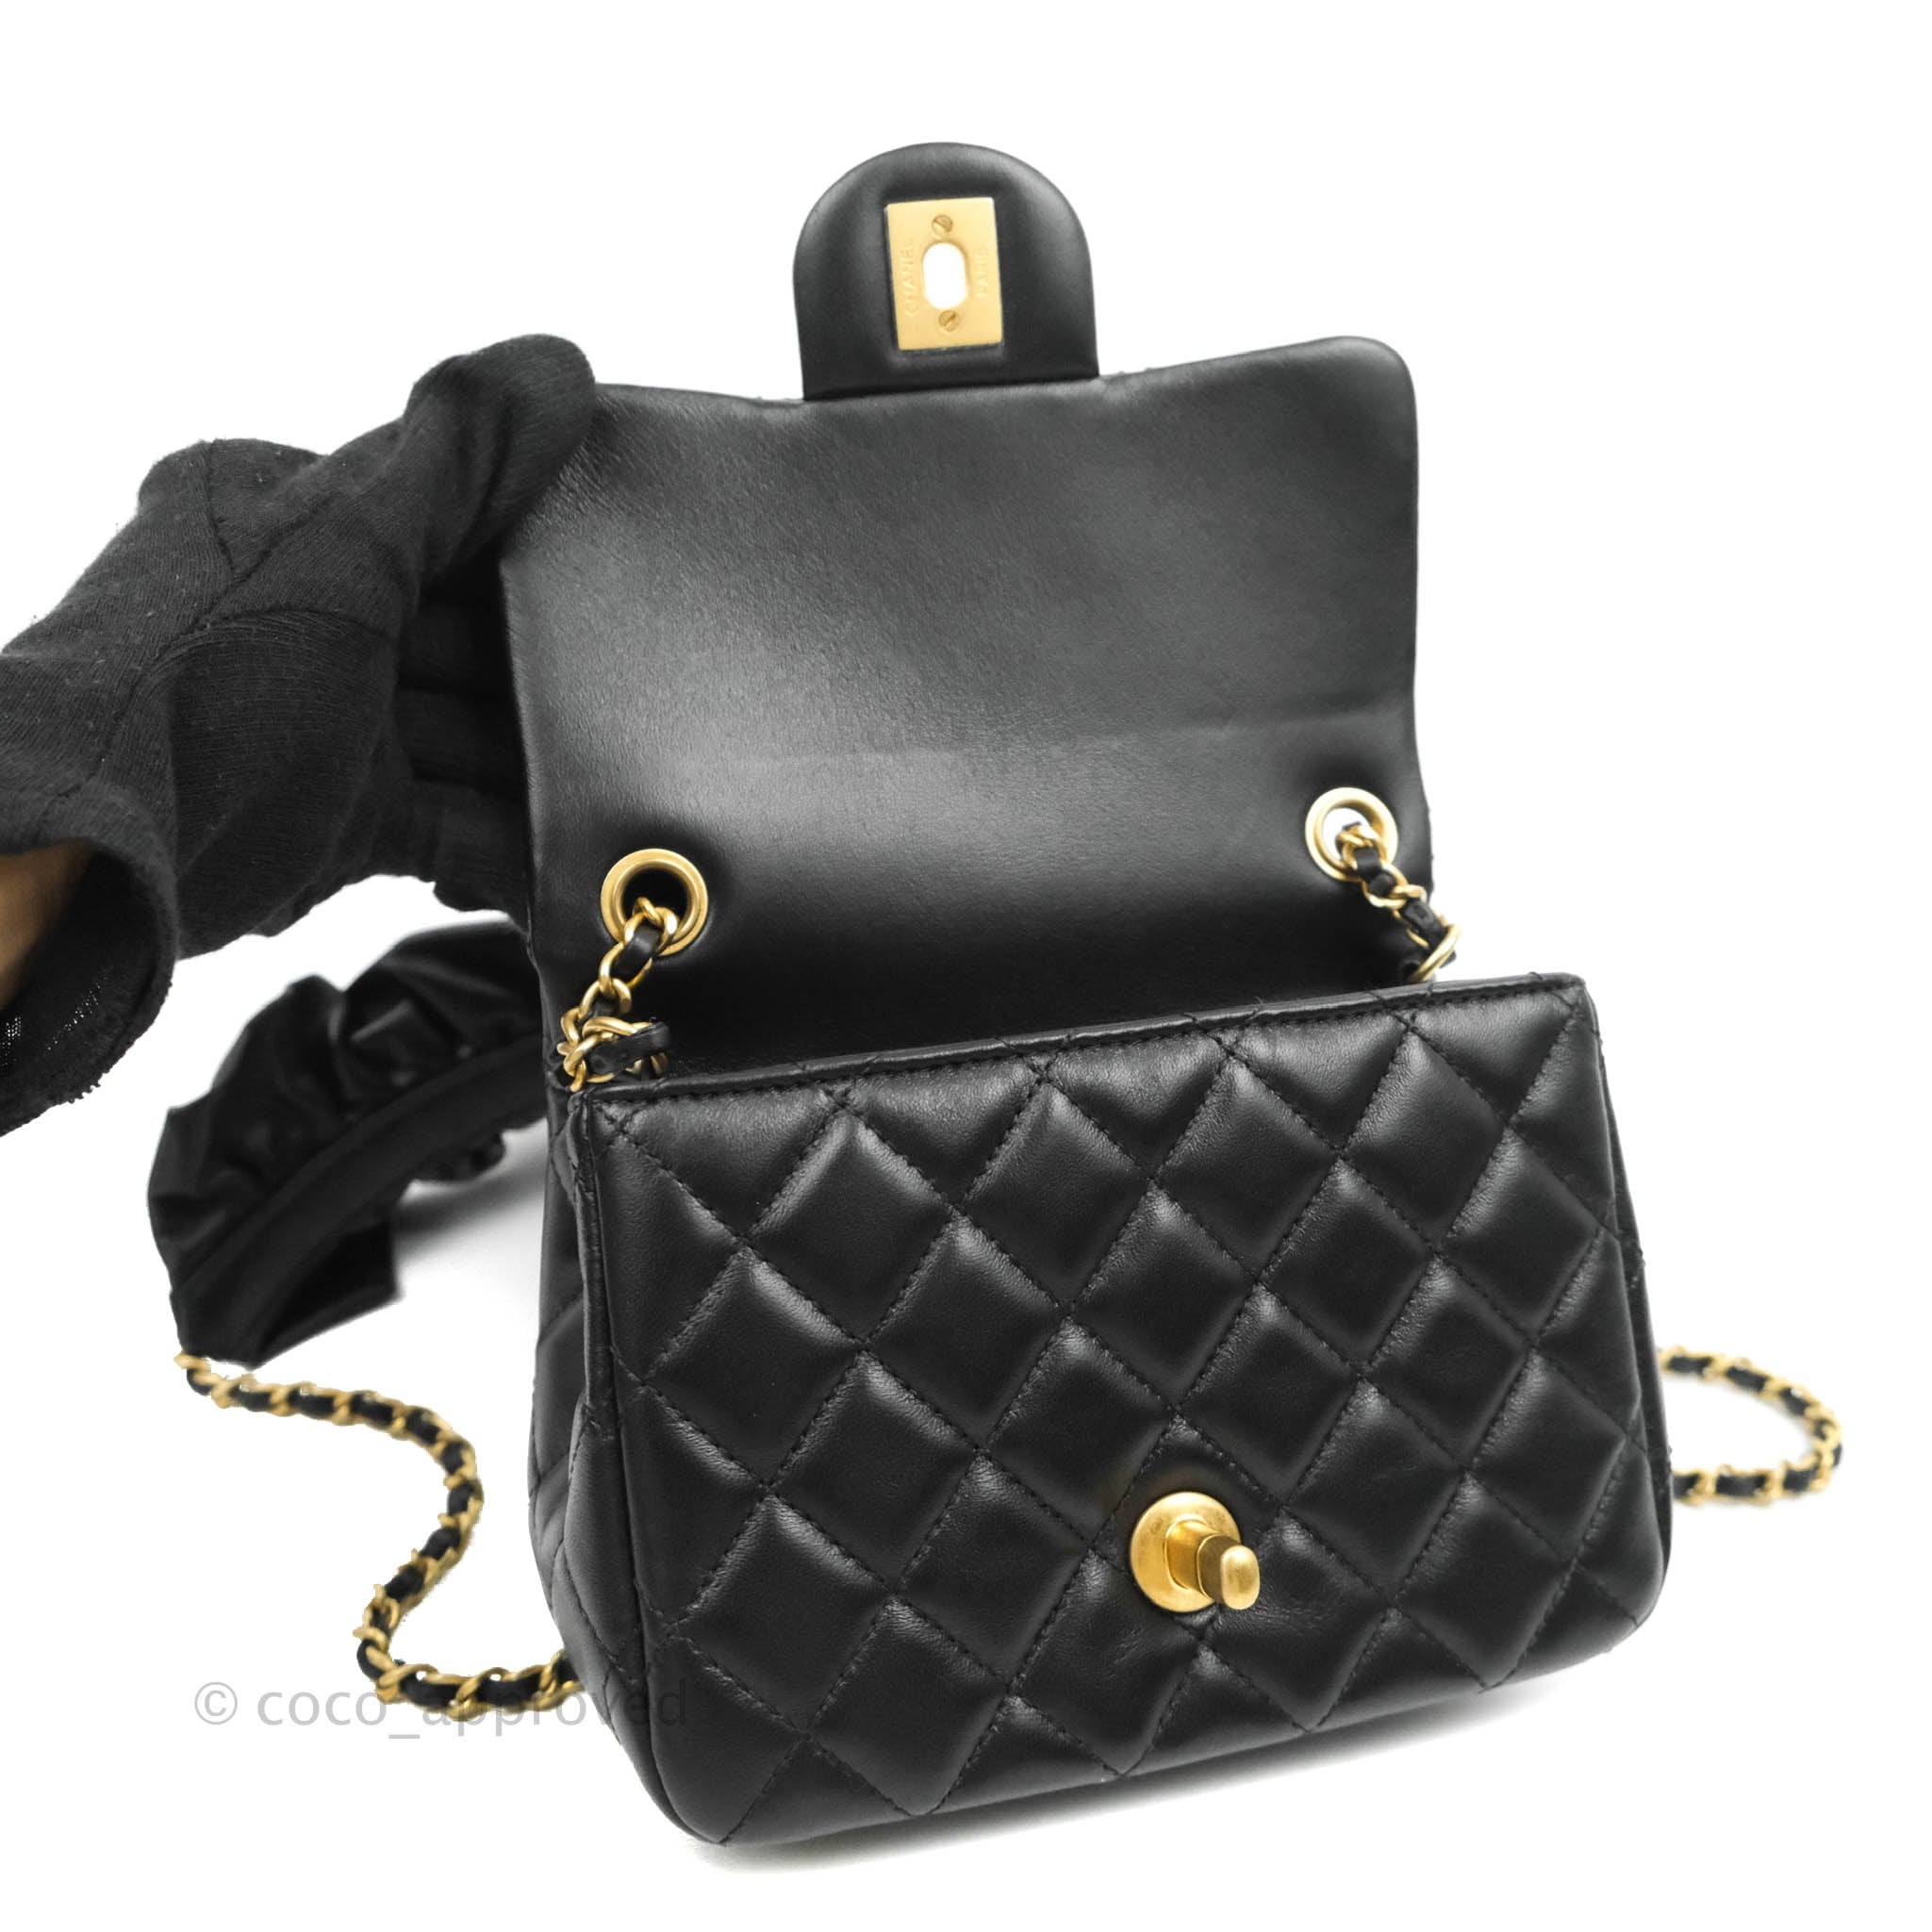 lovisabarkman / minimal / black / outfit / Chanel / classic flap / bag